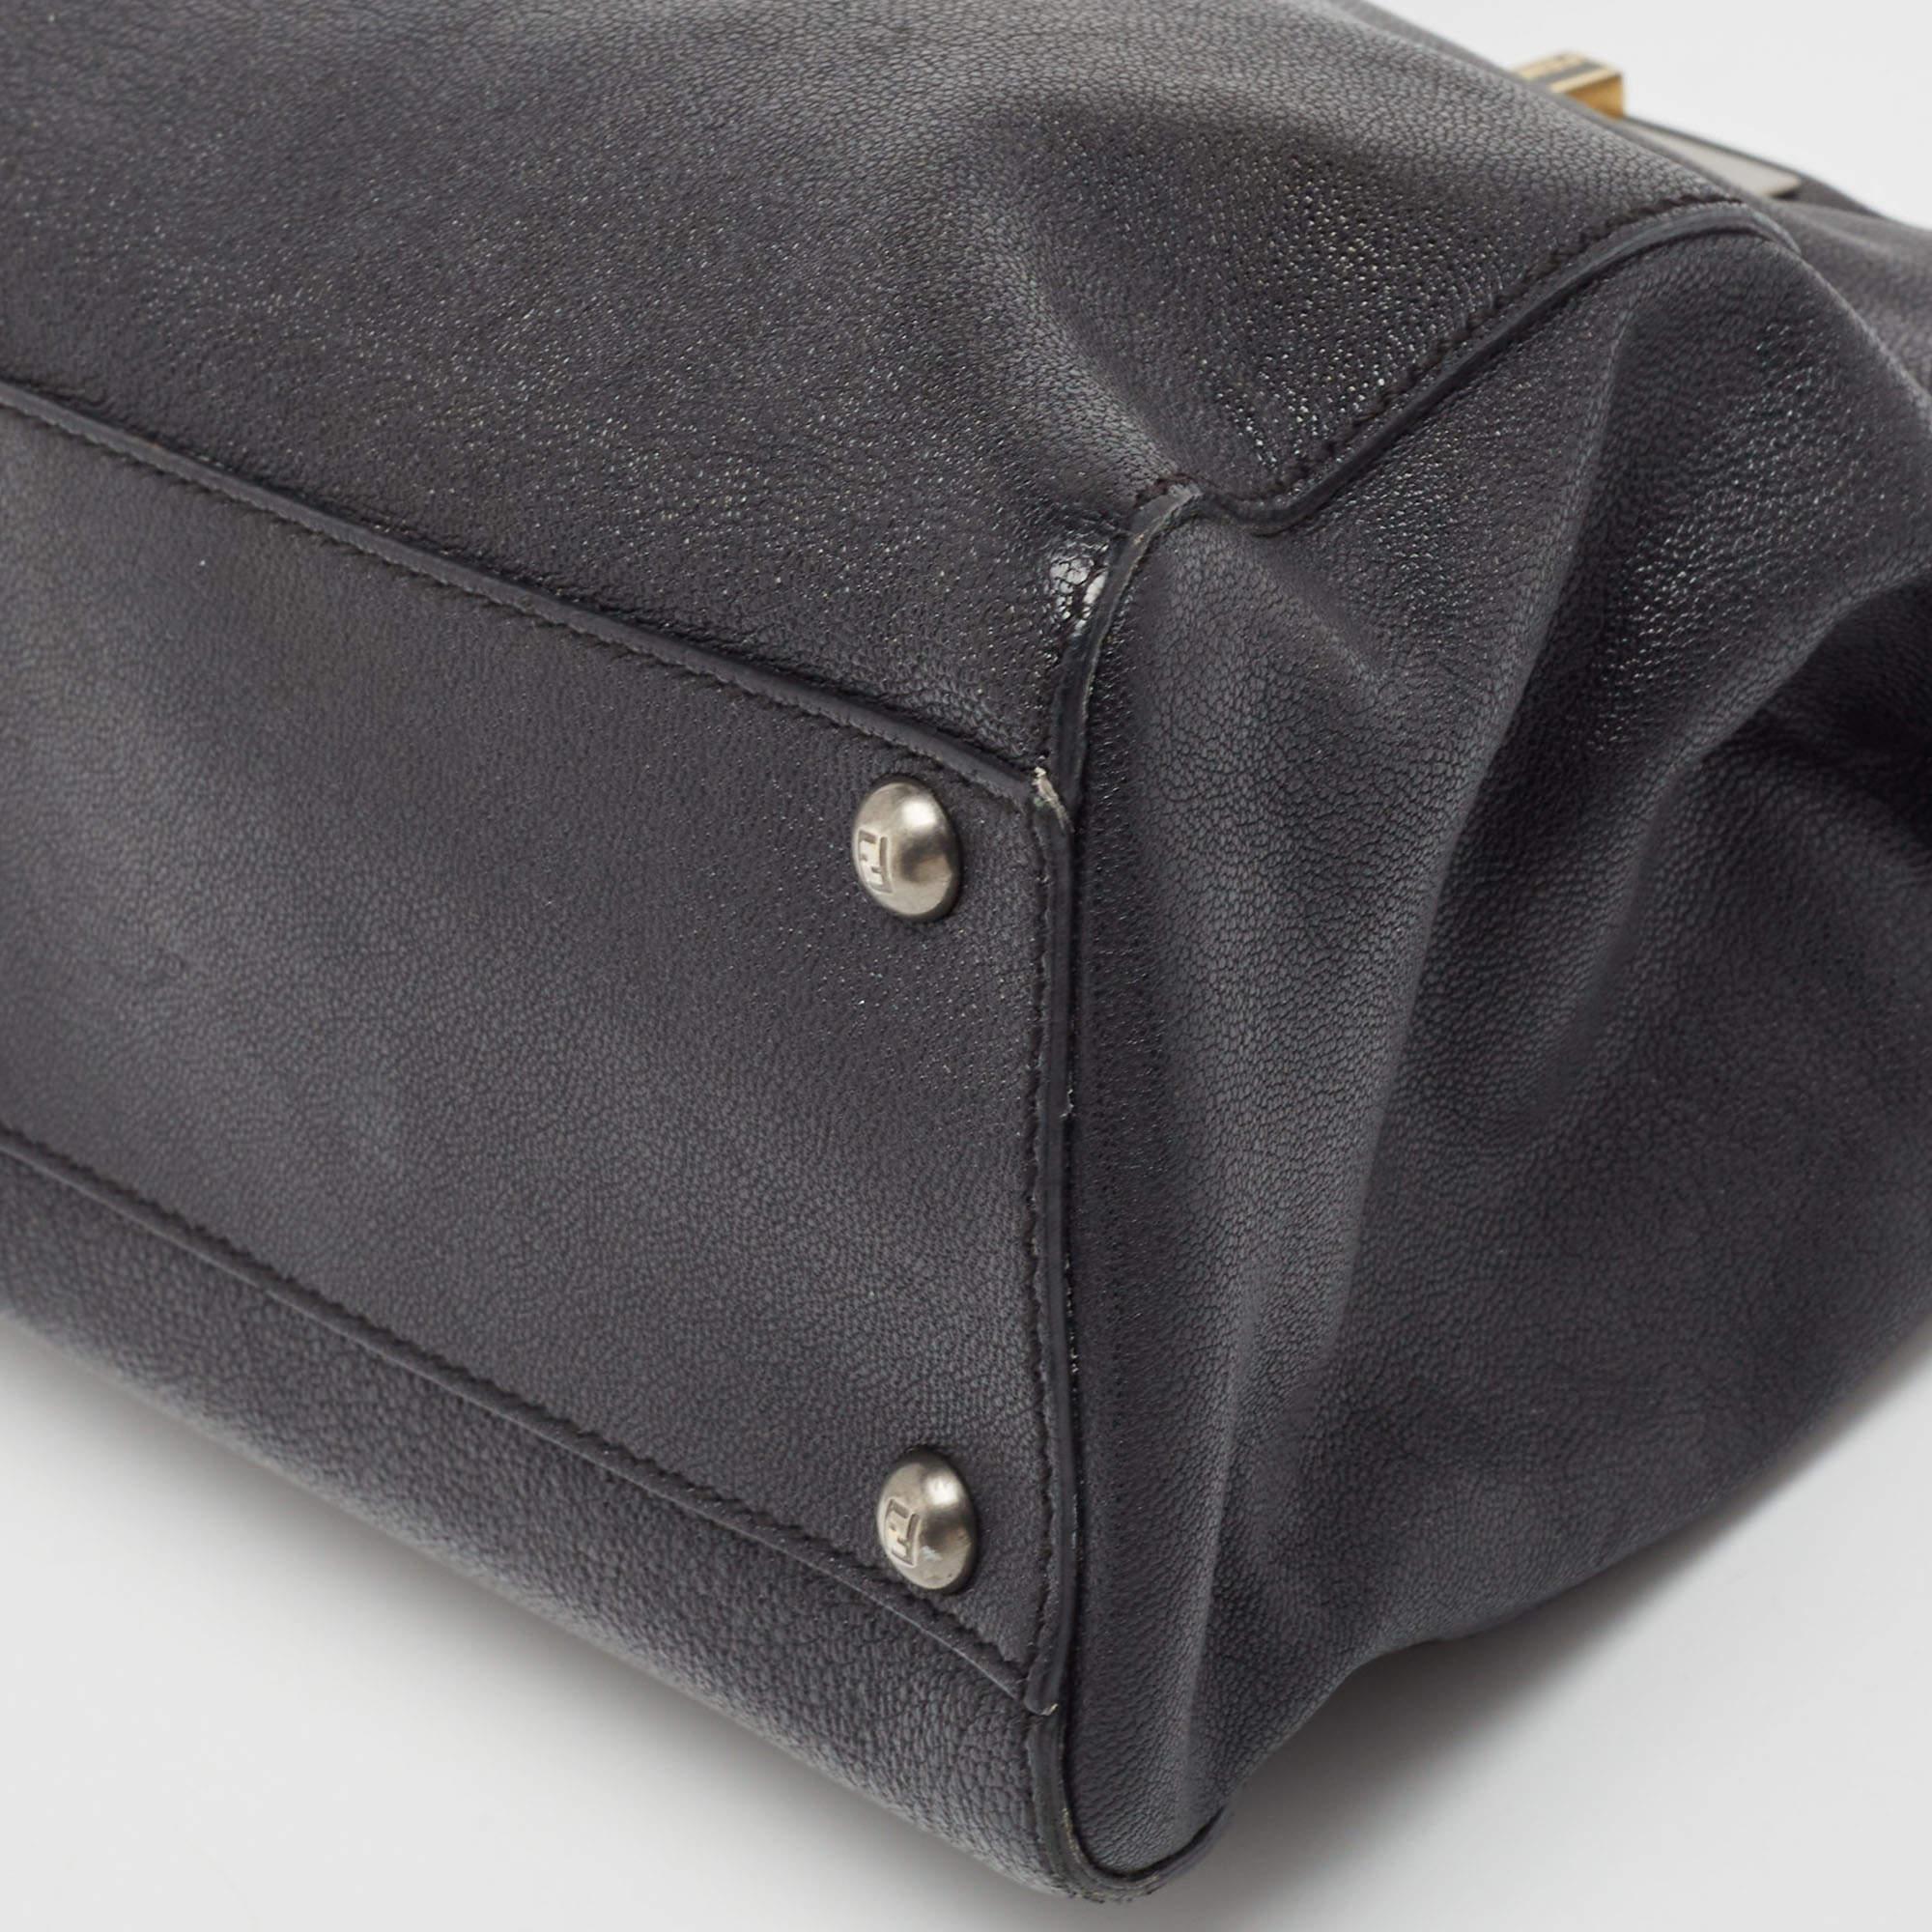 Women's Fendi Black Leather Medium Peekaboo Top Handle Bag